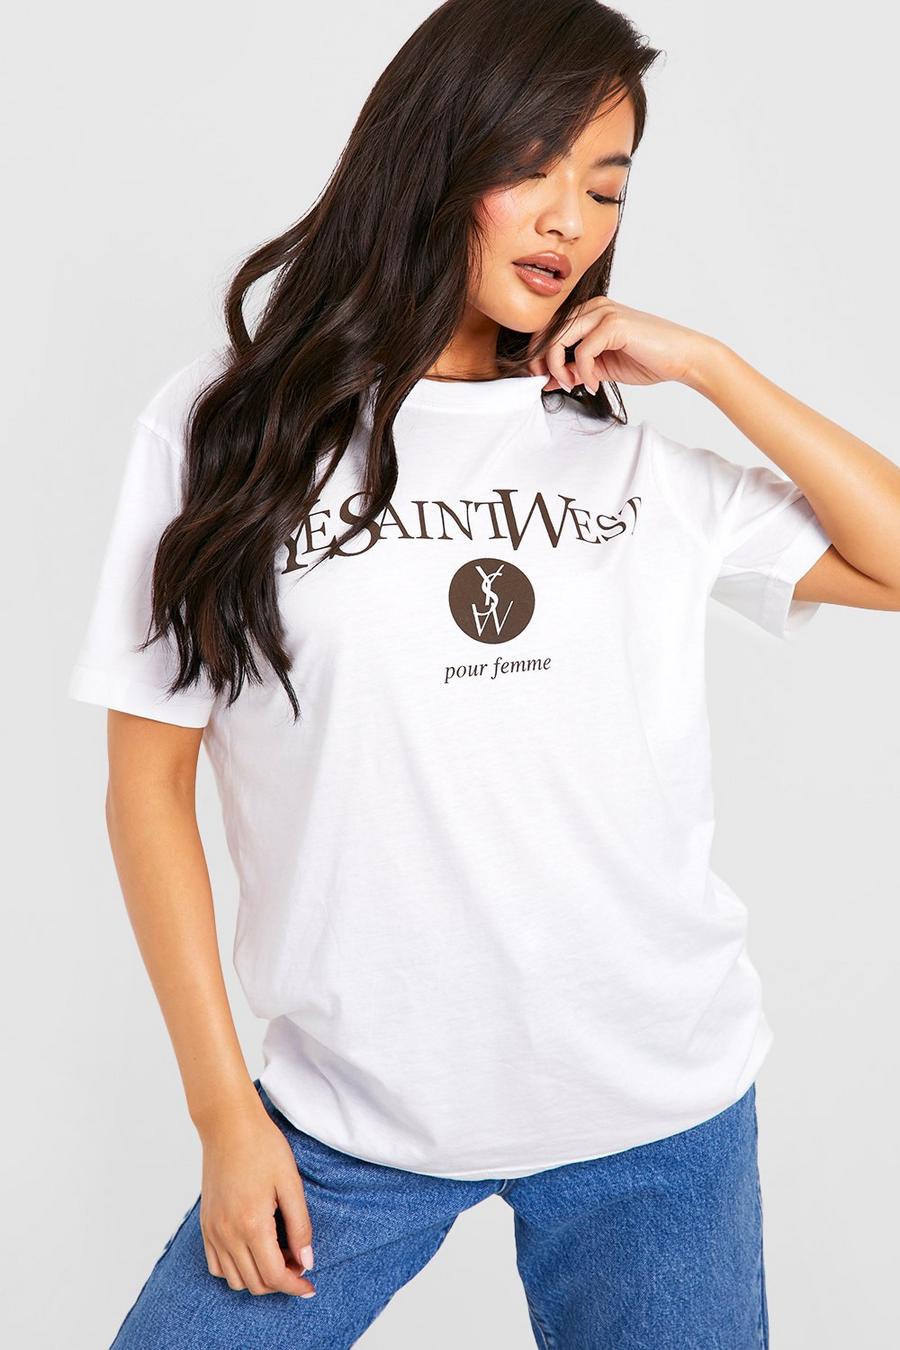 White Ye Saint West Pour Femme Oversized T-shirt